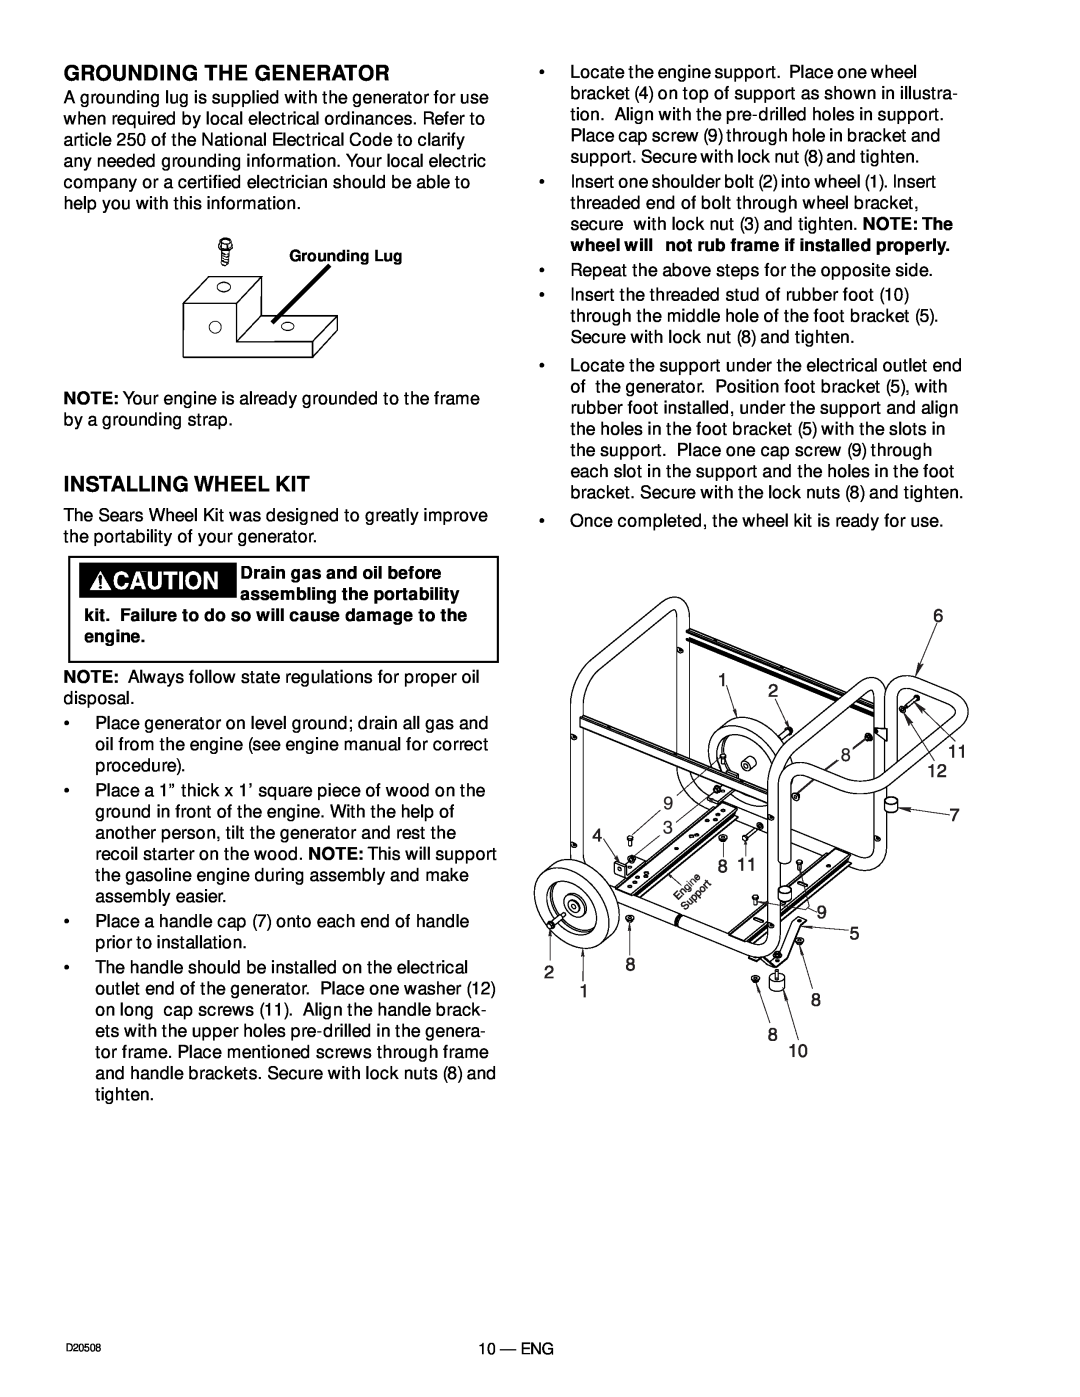 Sears D20508, 919.329110 owner manual Grounding The Generator, Installing Wheel Kit 